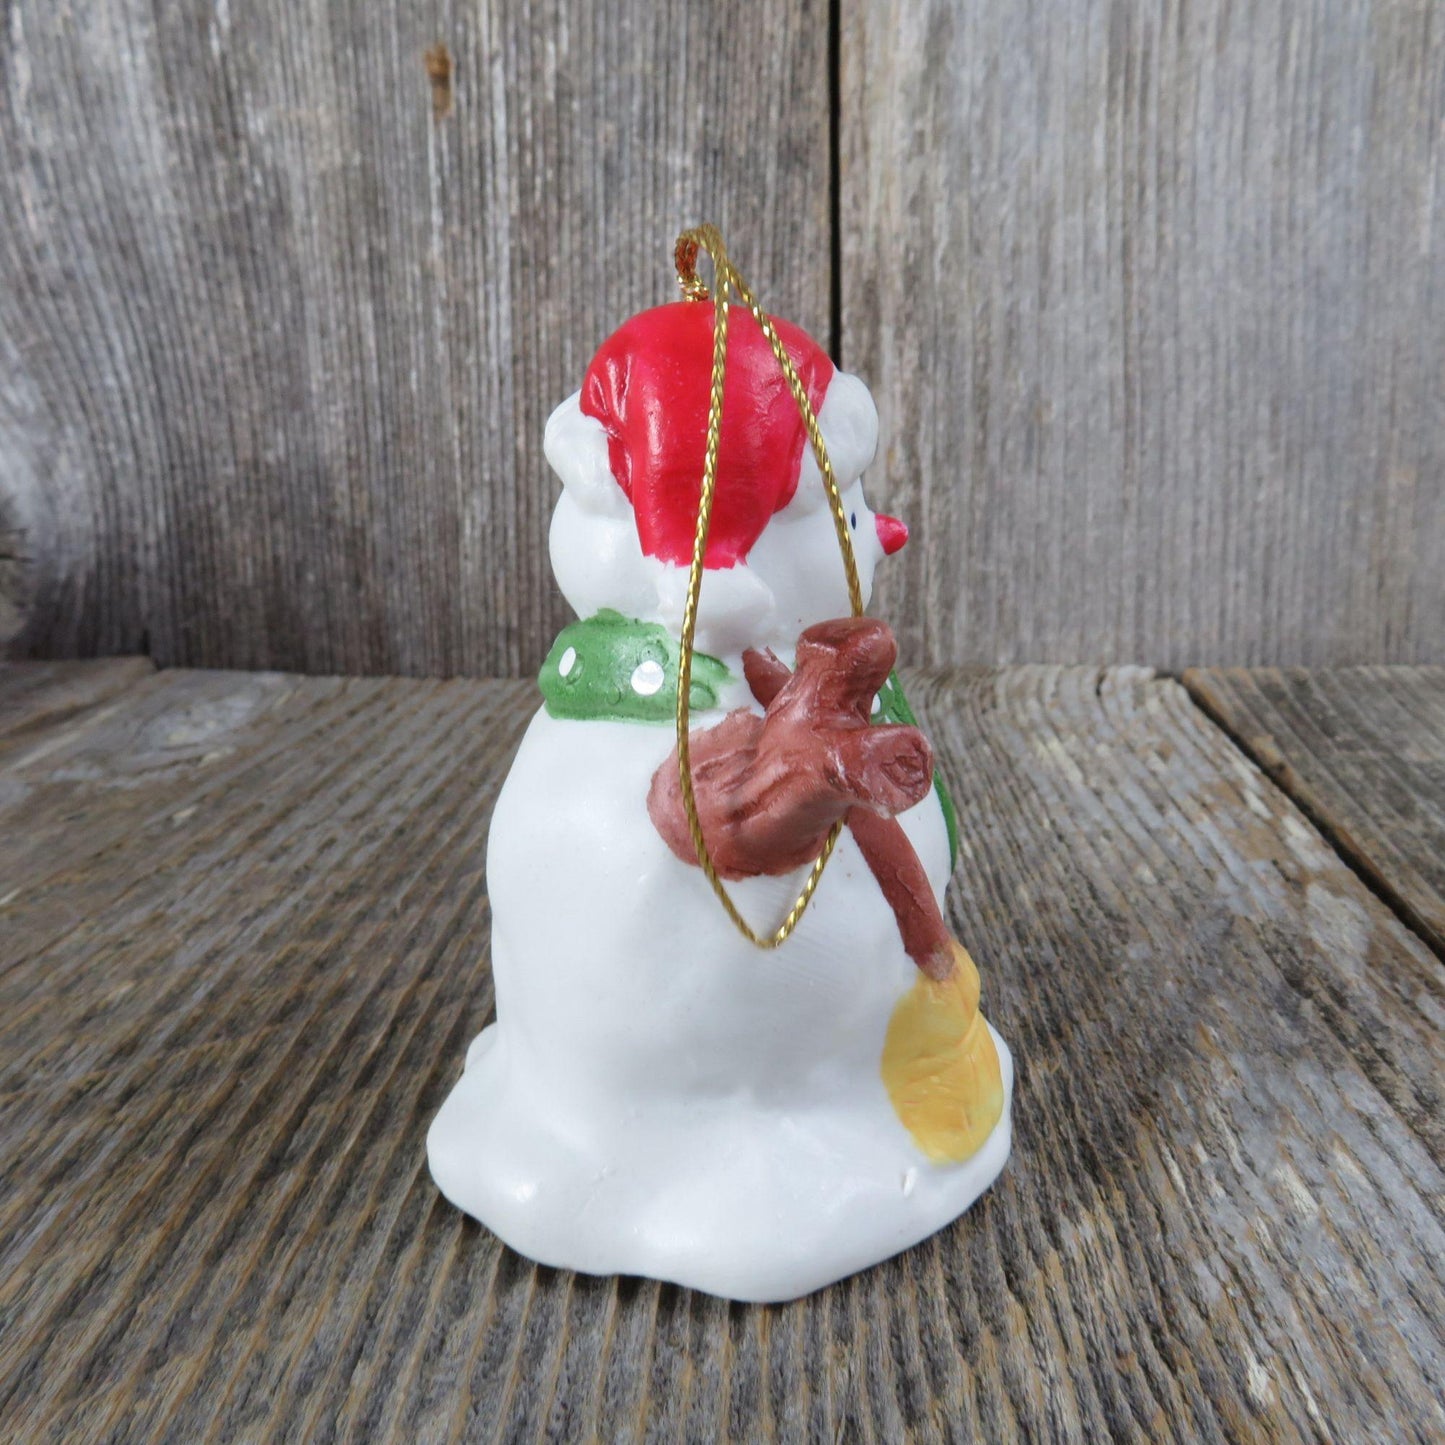 Vintage Snowman Bell Ornament Christmas Around the World Ceramic Porcelain Taiwan